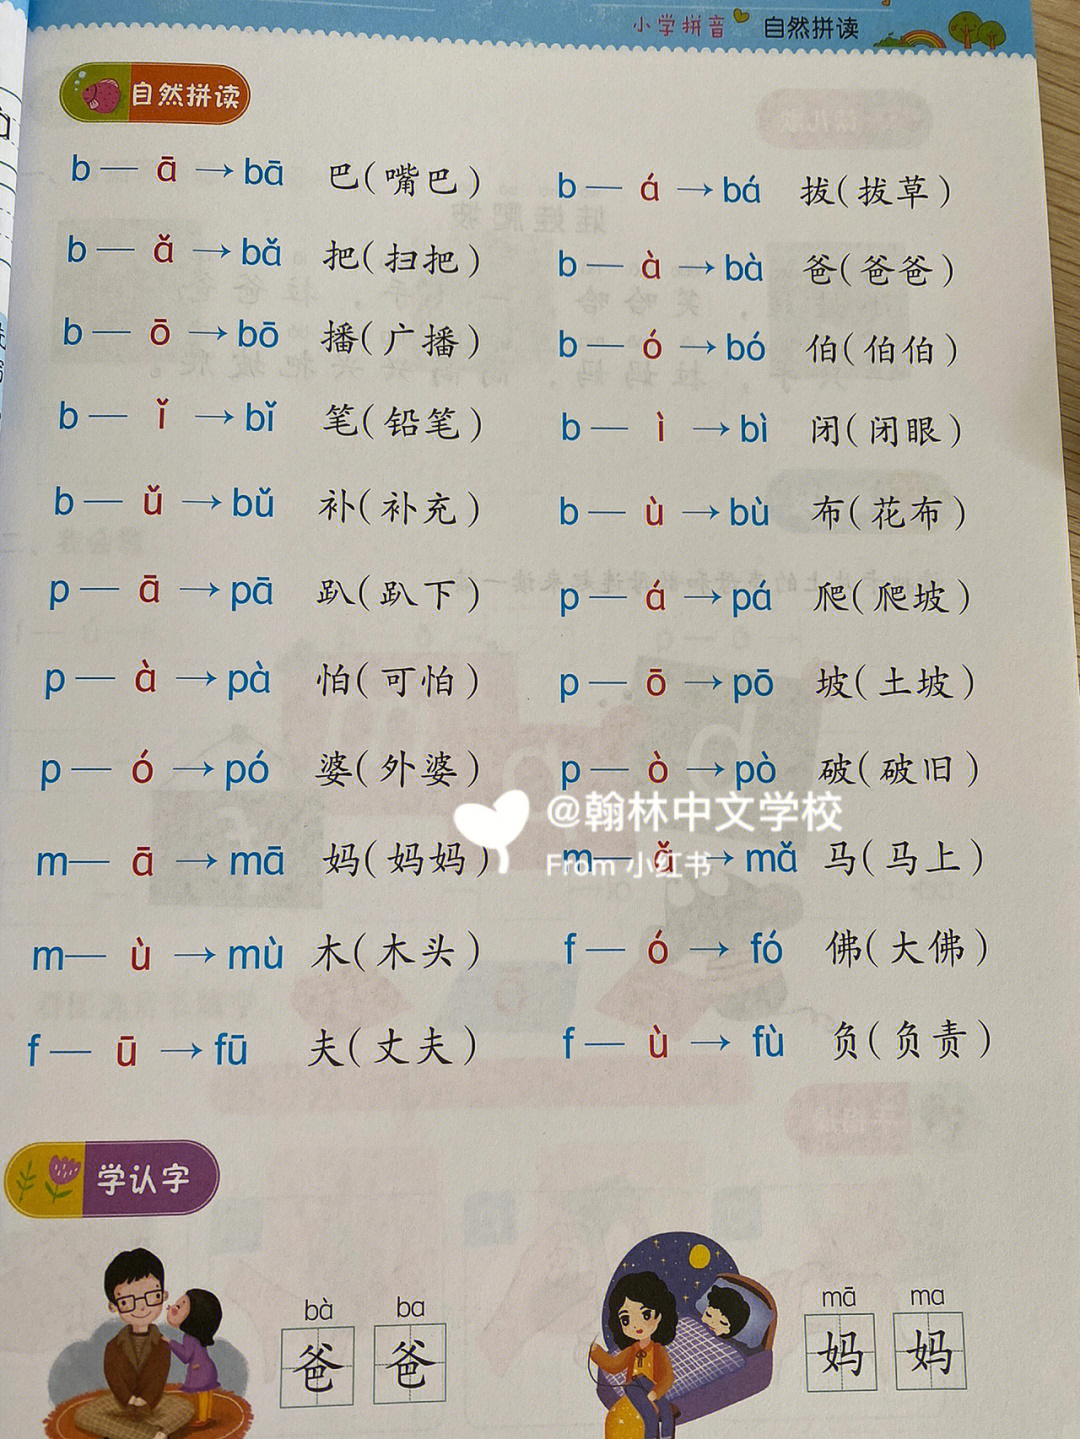 tokyo翰林中文学校 自然拼读分享对于刚入门学习拼音的孩子来说,这本